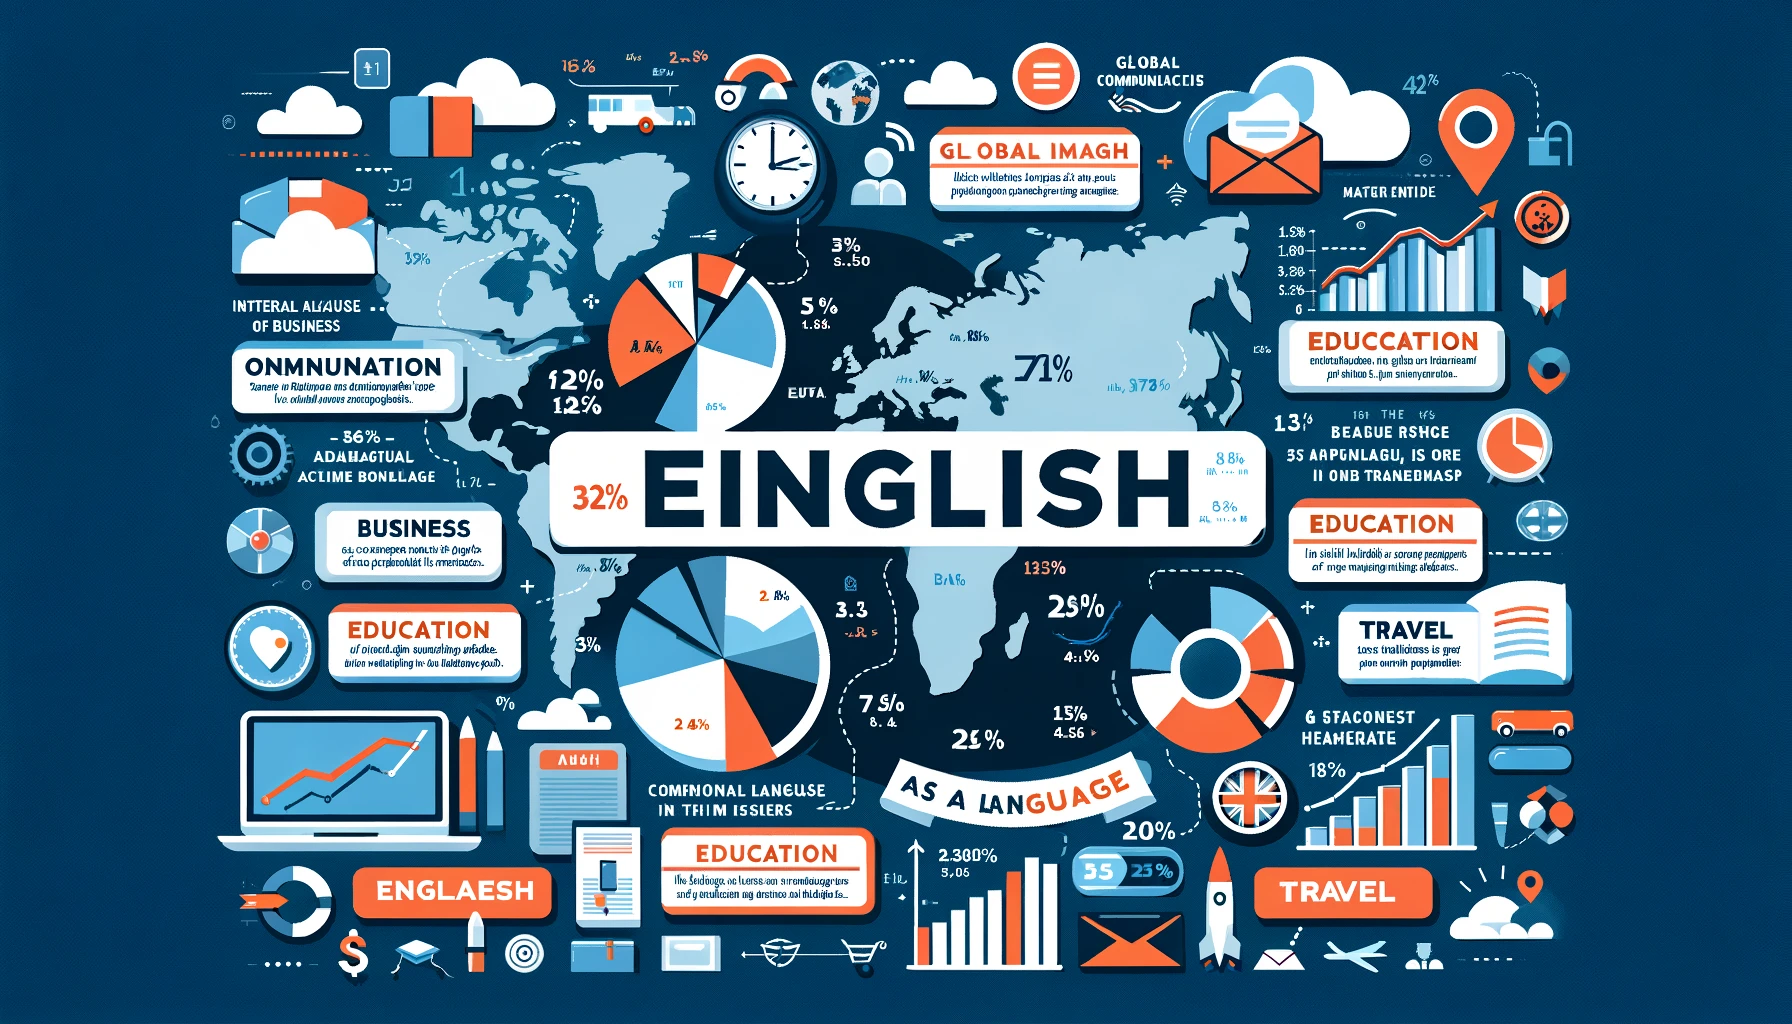 Importance of English As A Language